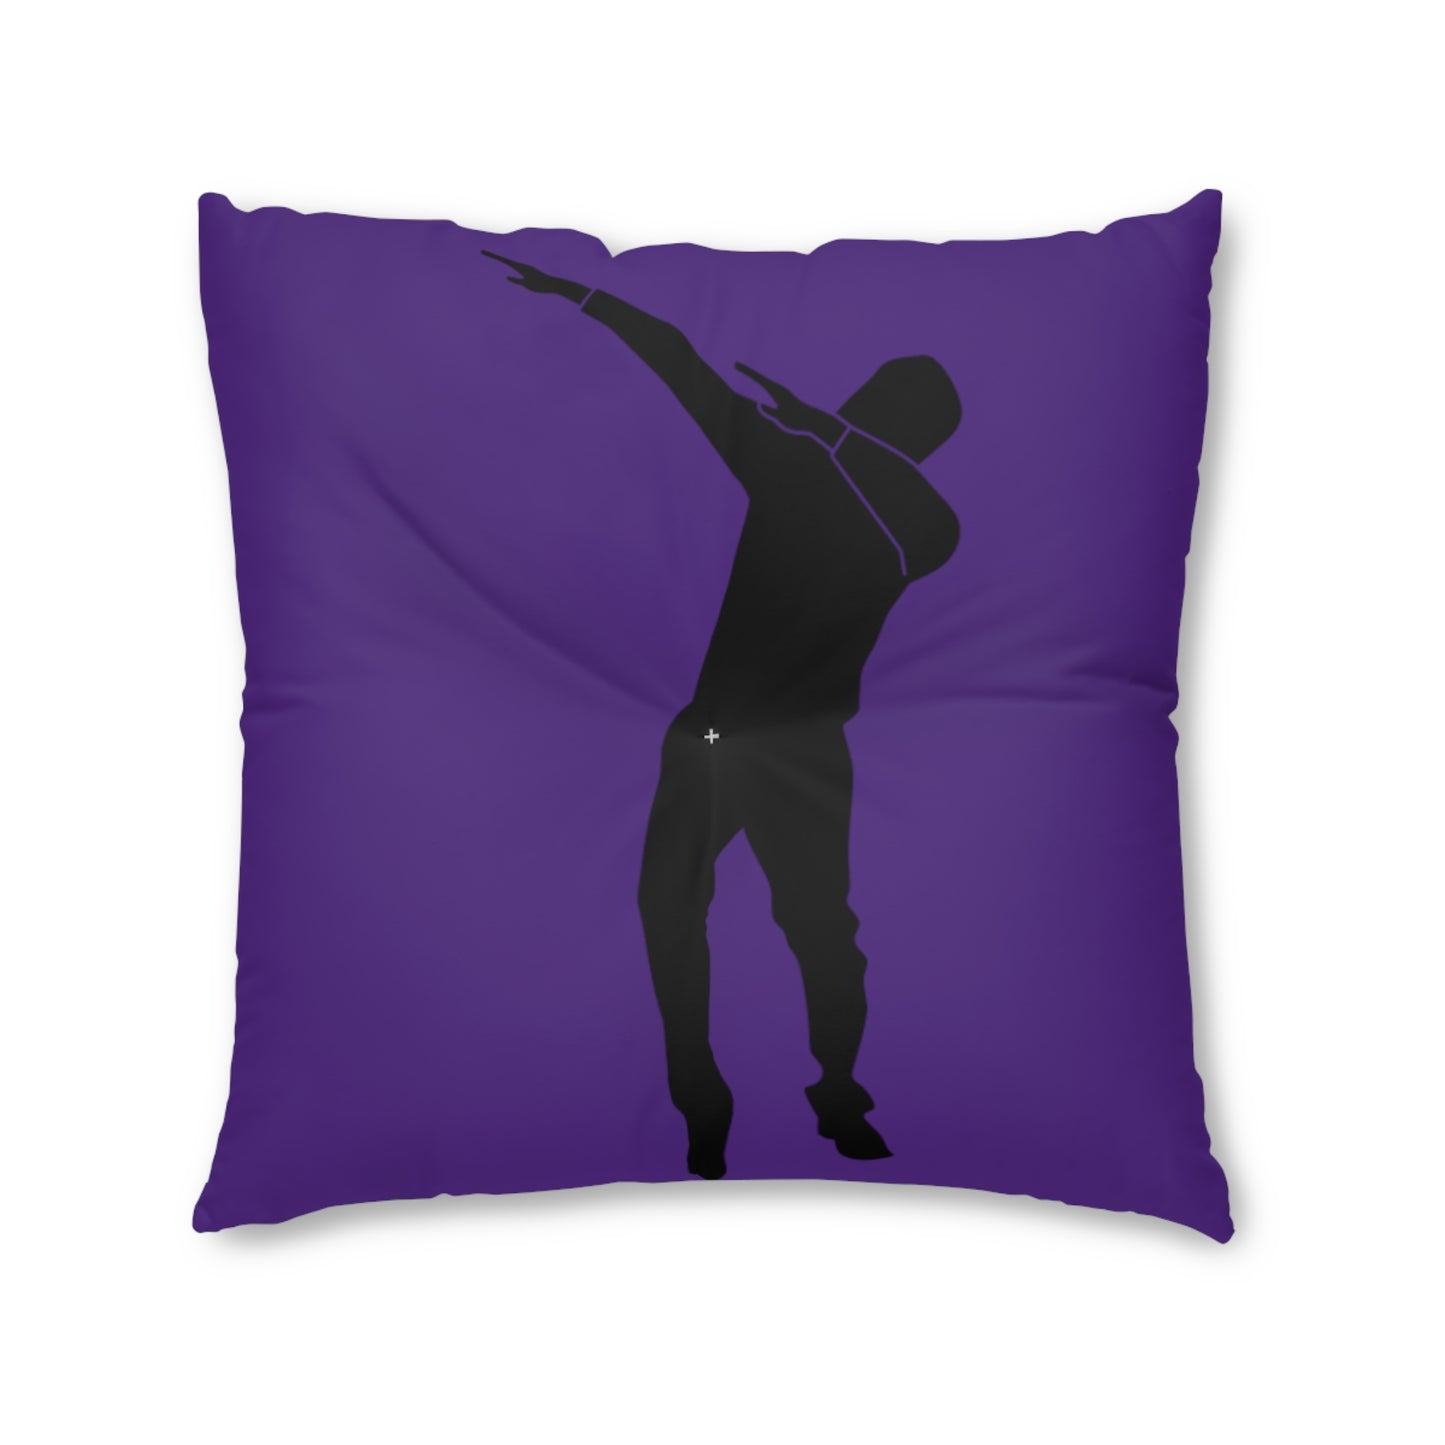 Tufted Floor Pillow, Square: Dance Purple